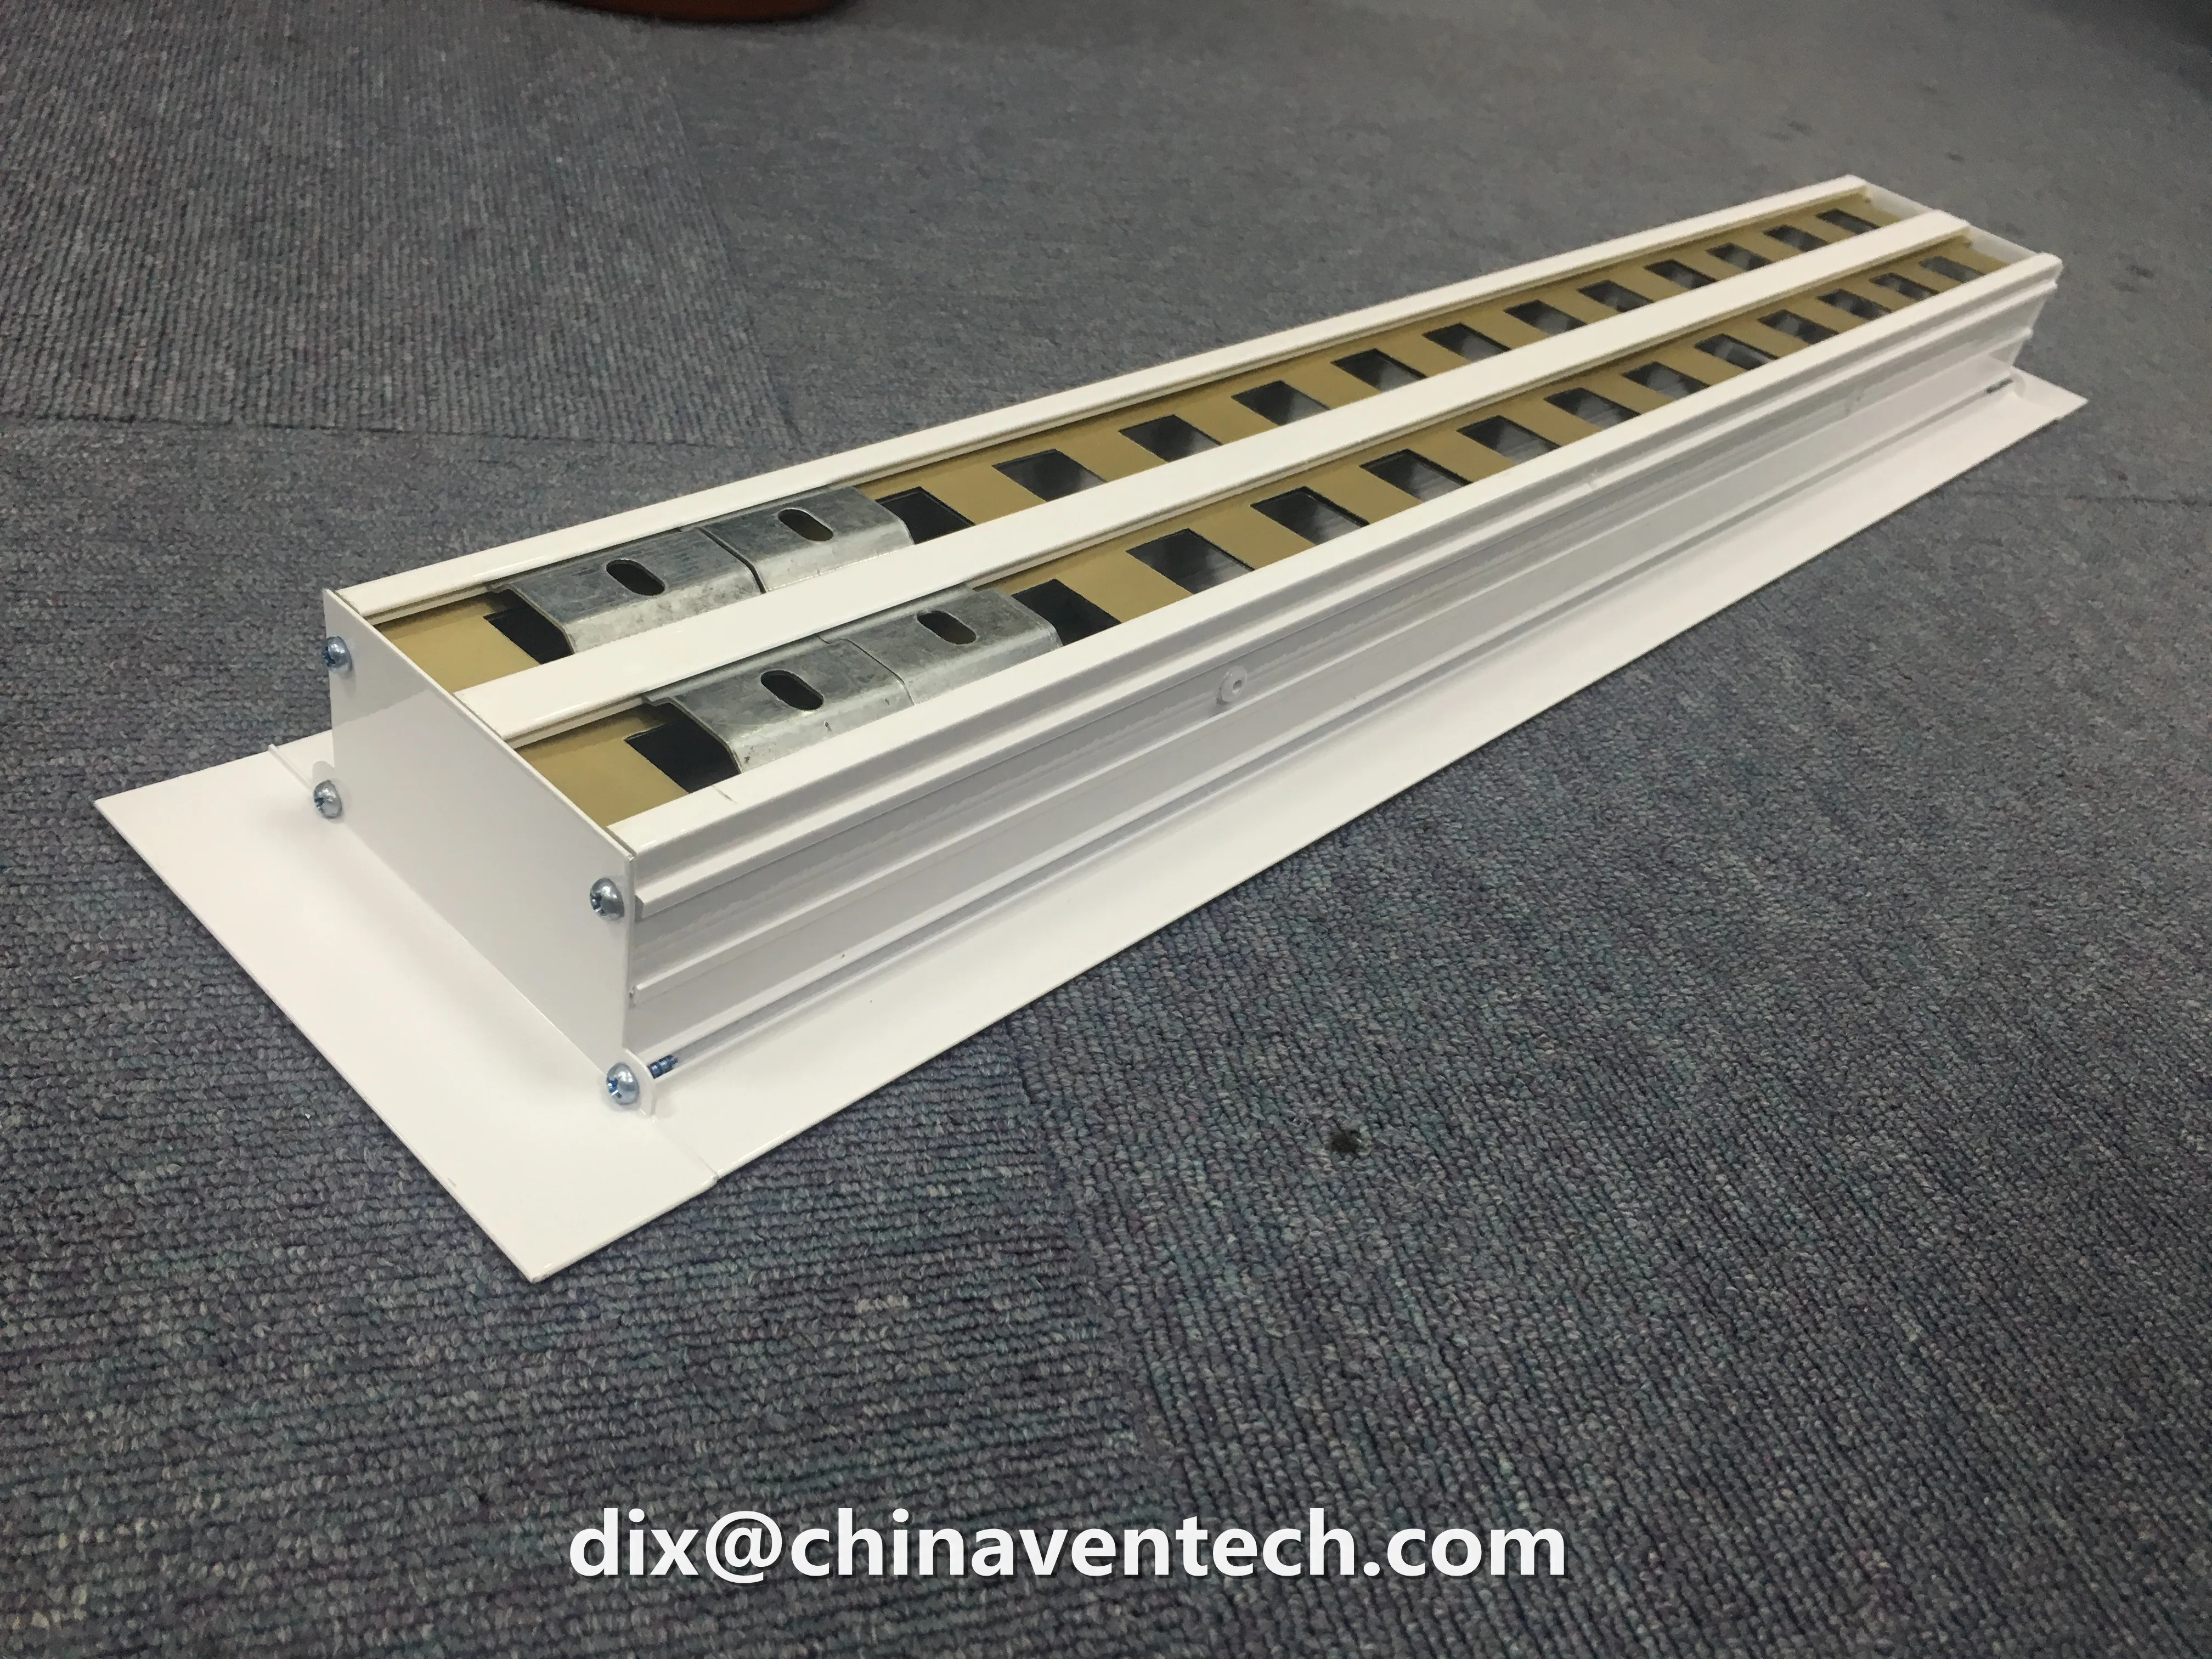 Hvac duct work flowbar diffuser air supply linear slot diffuser with plenum box